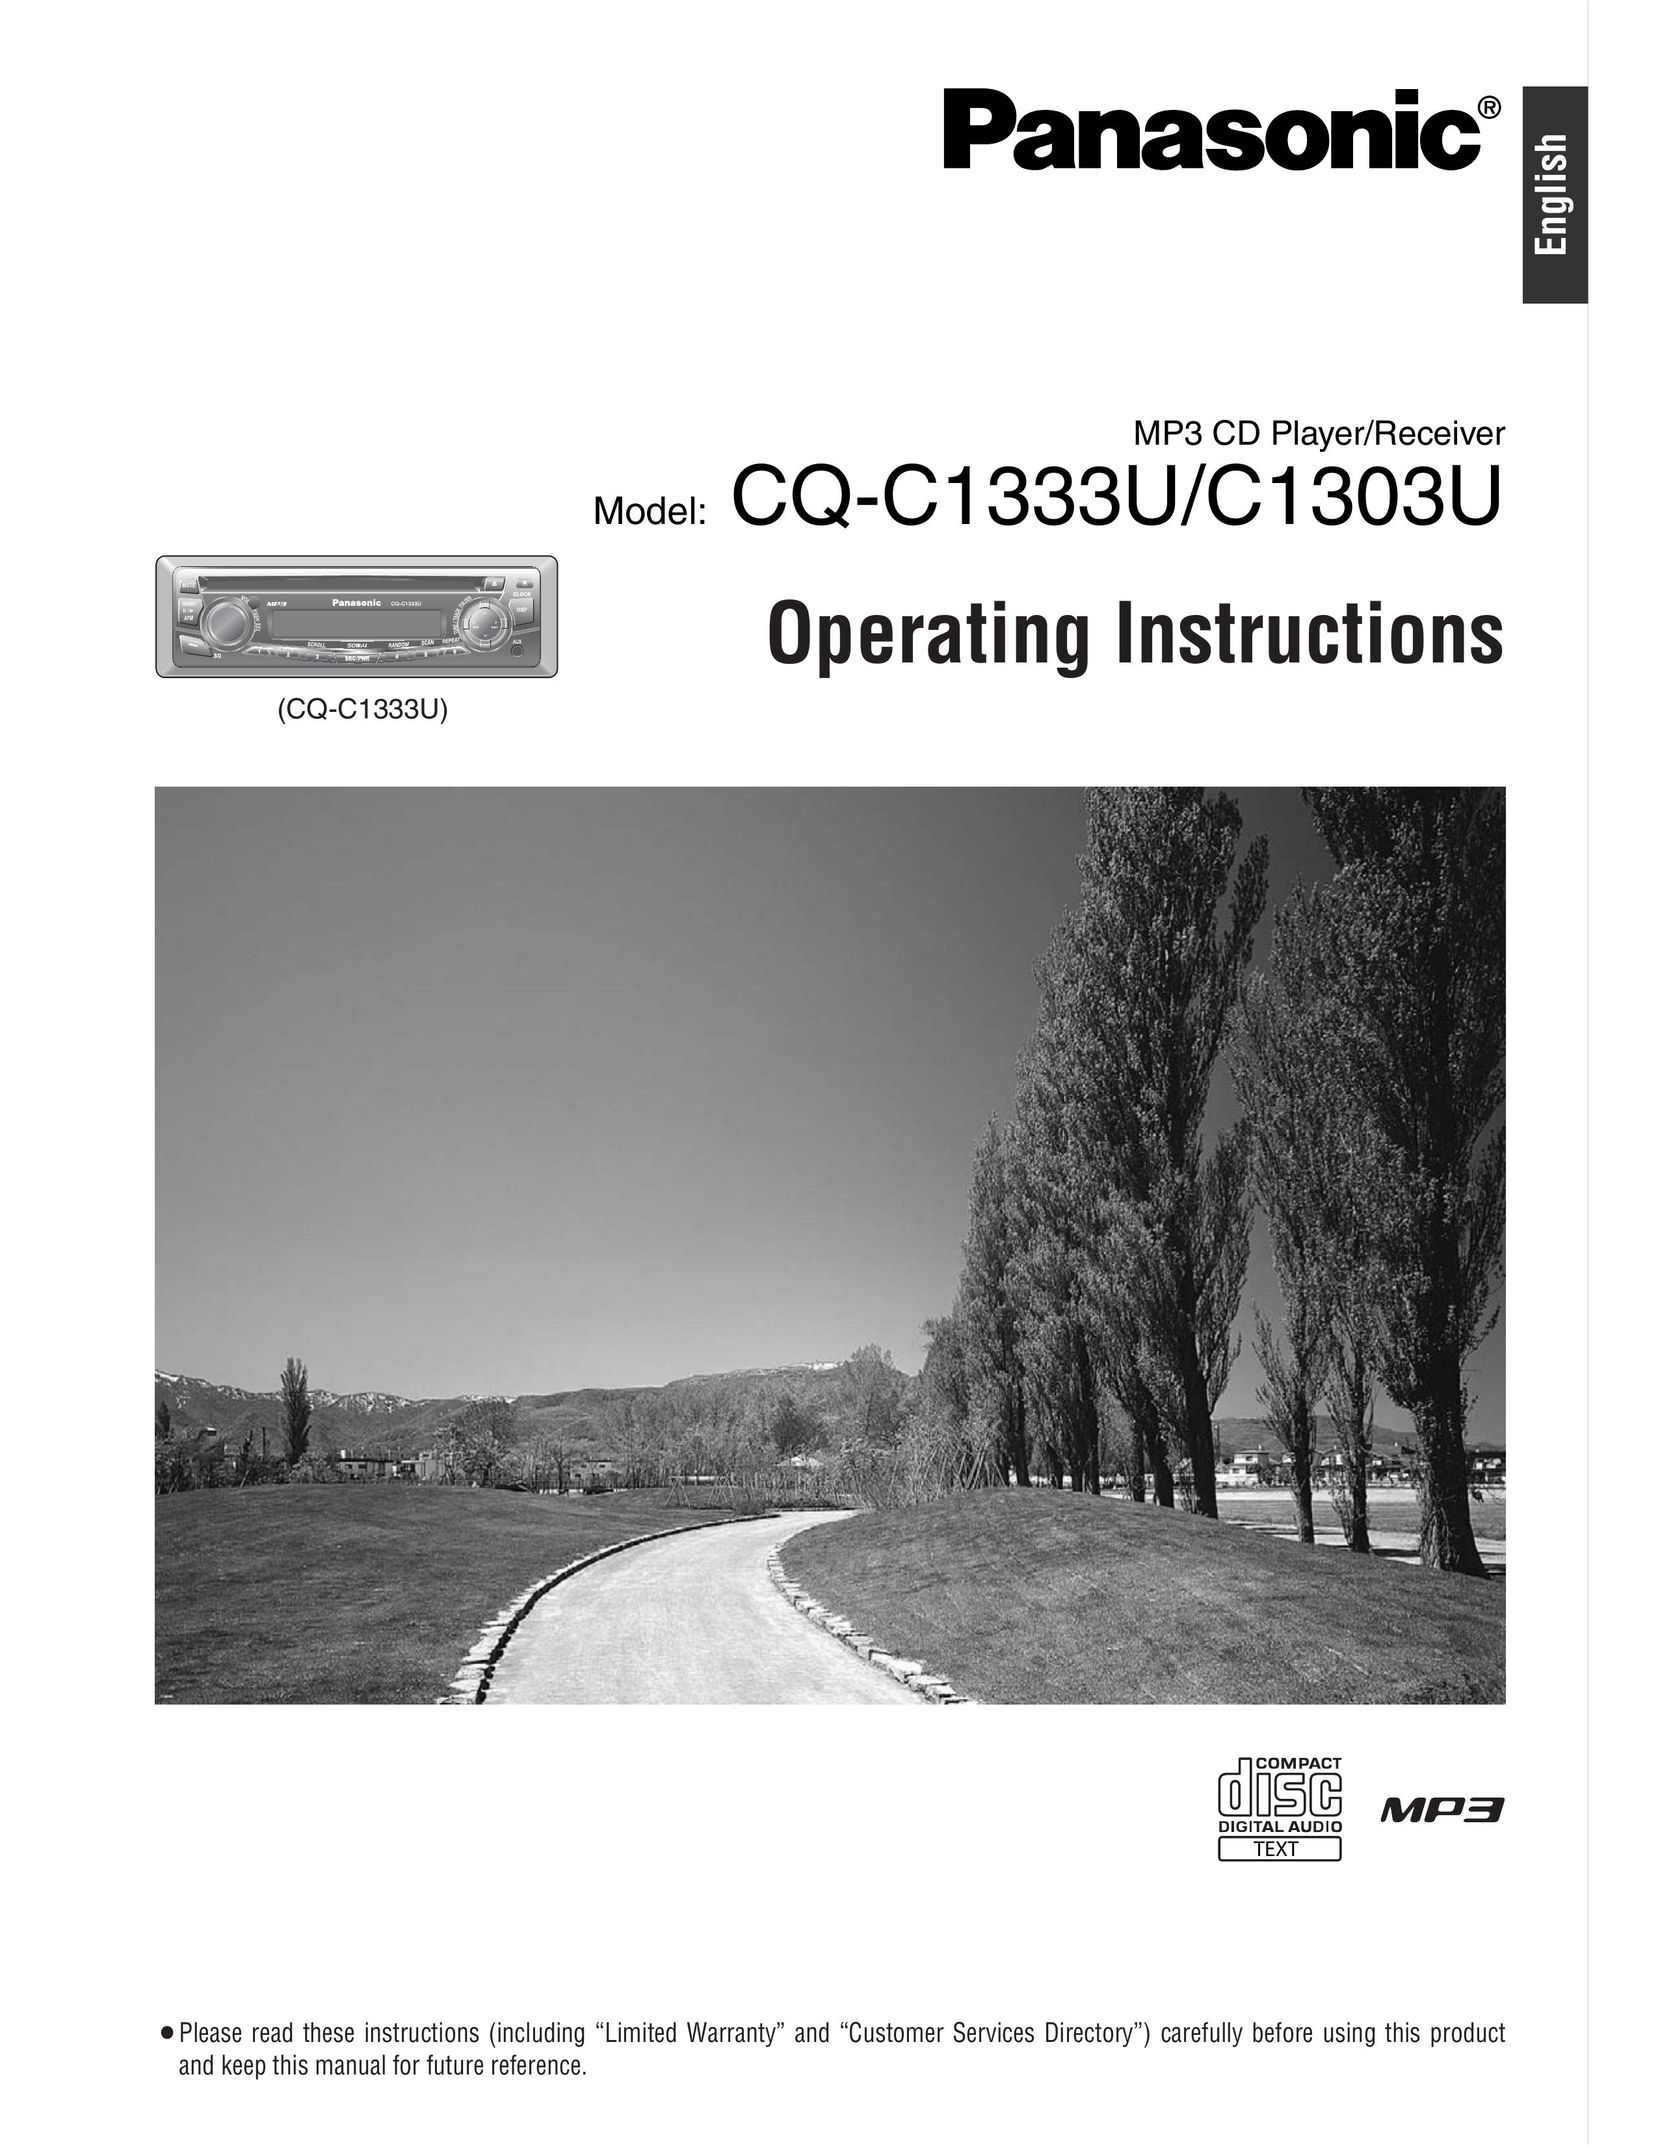 Panasonic C1303U Car Stereo System User Manual